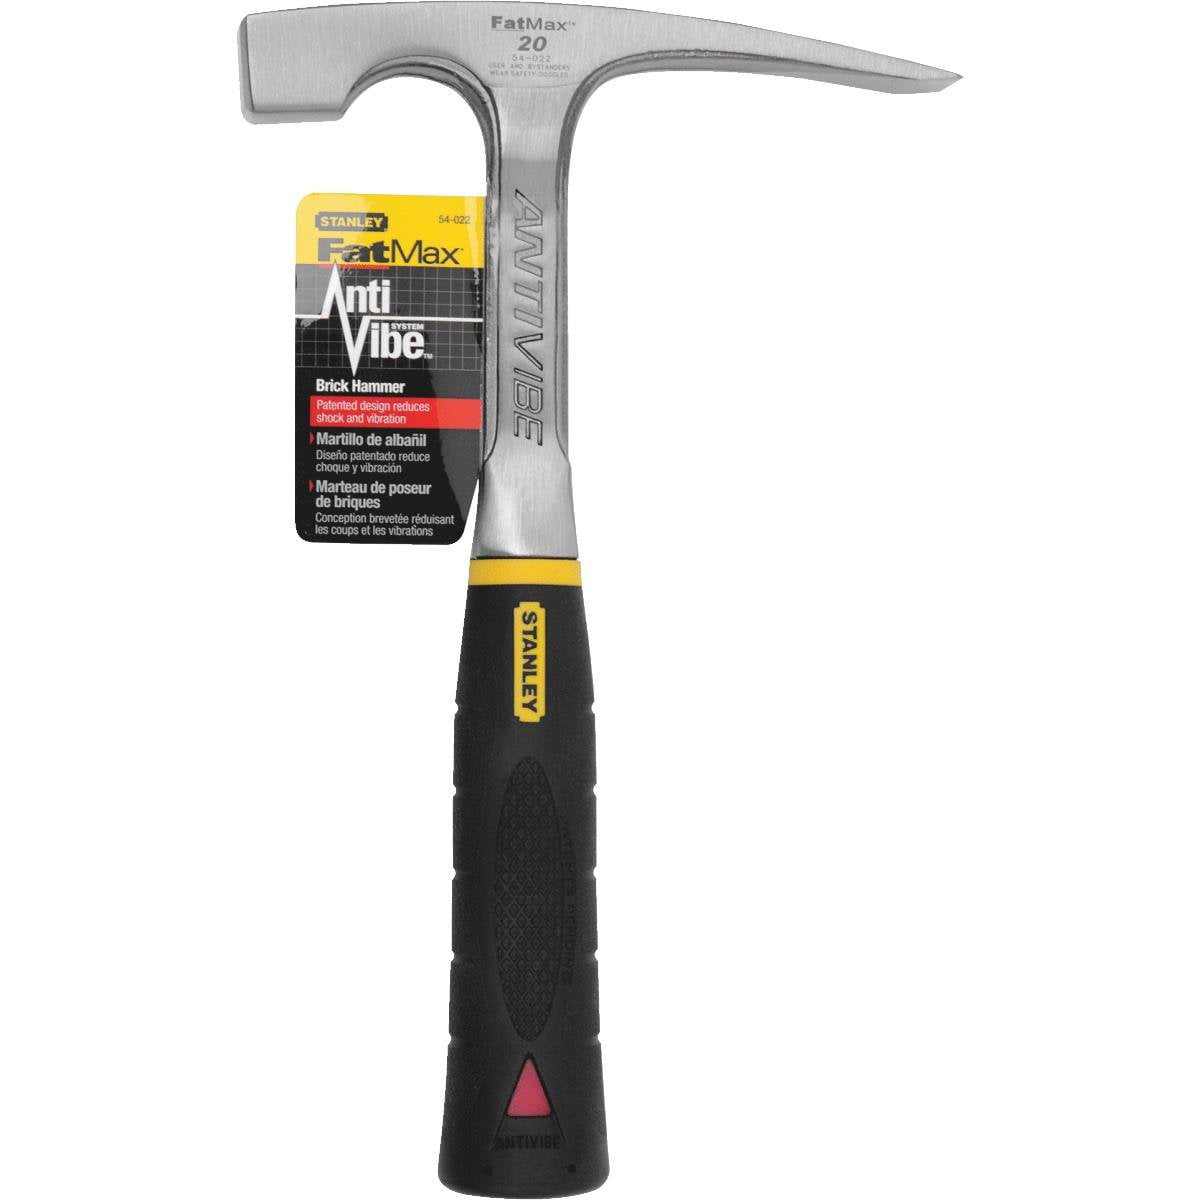 STANLEY FatMax 54-022 20-Ounce AntiVibe Brick Hammer